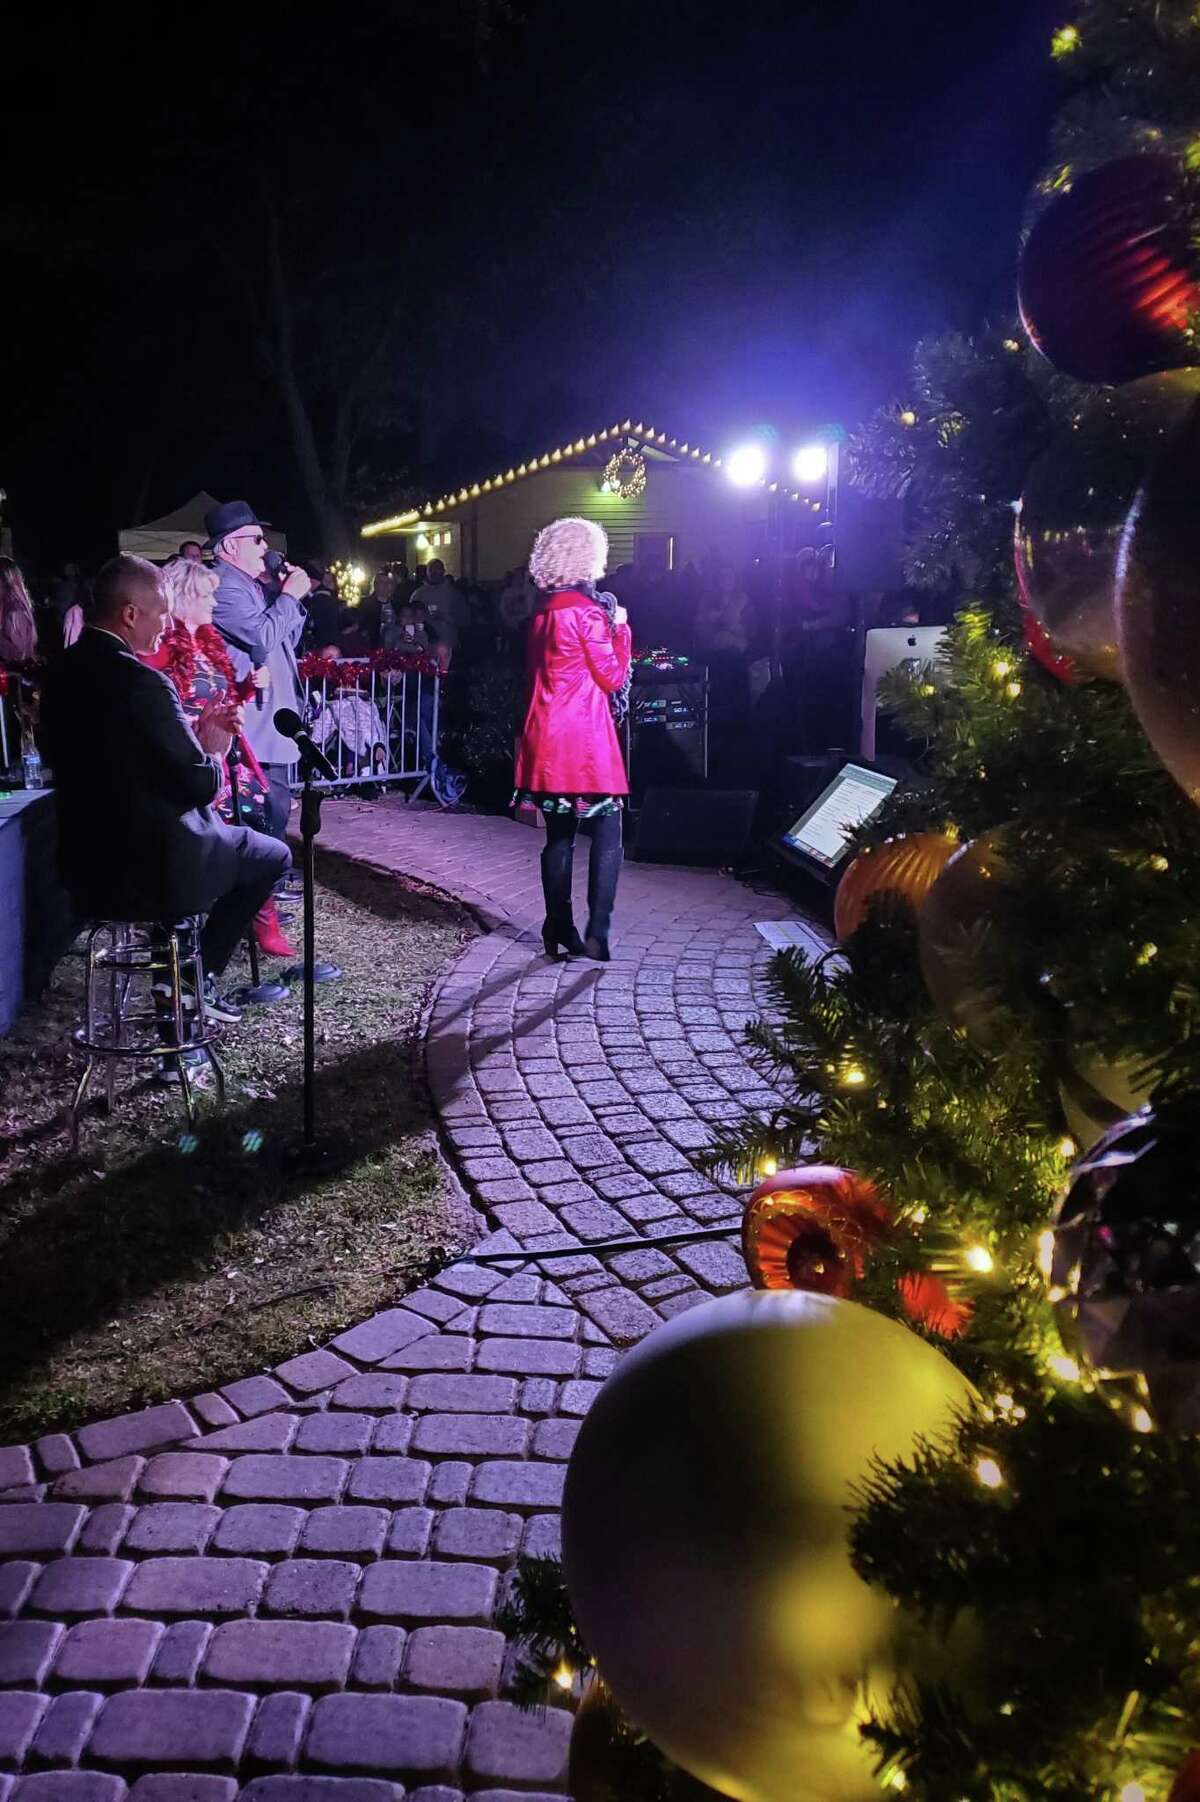 Tomball kicks off holiday season with tree lighting, parade, Miss